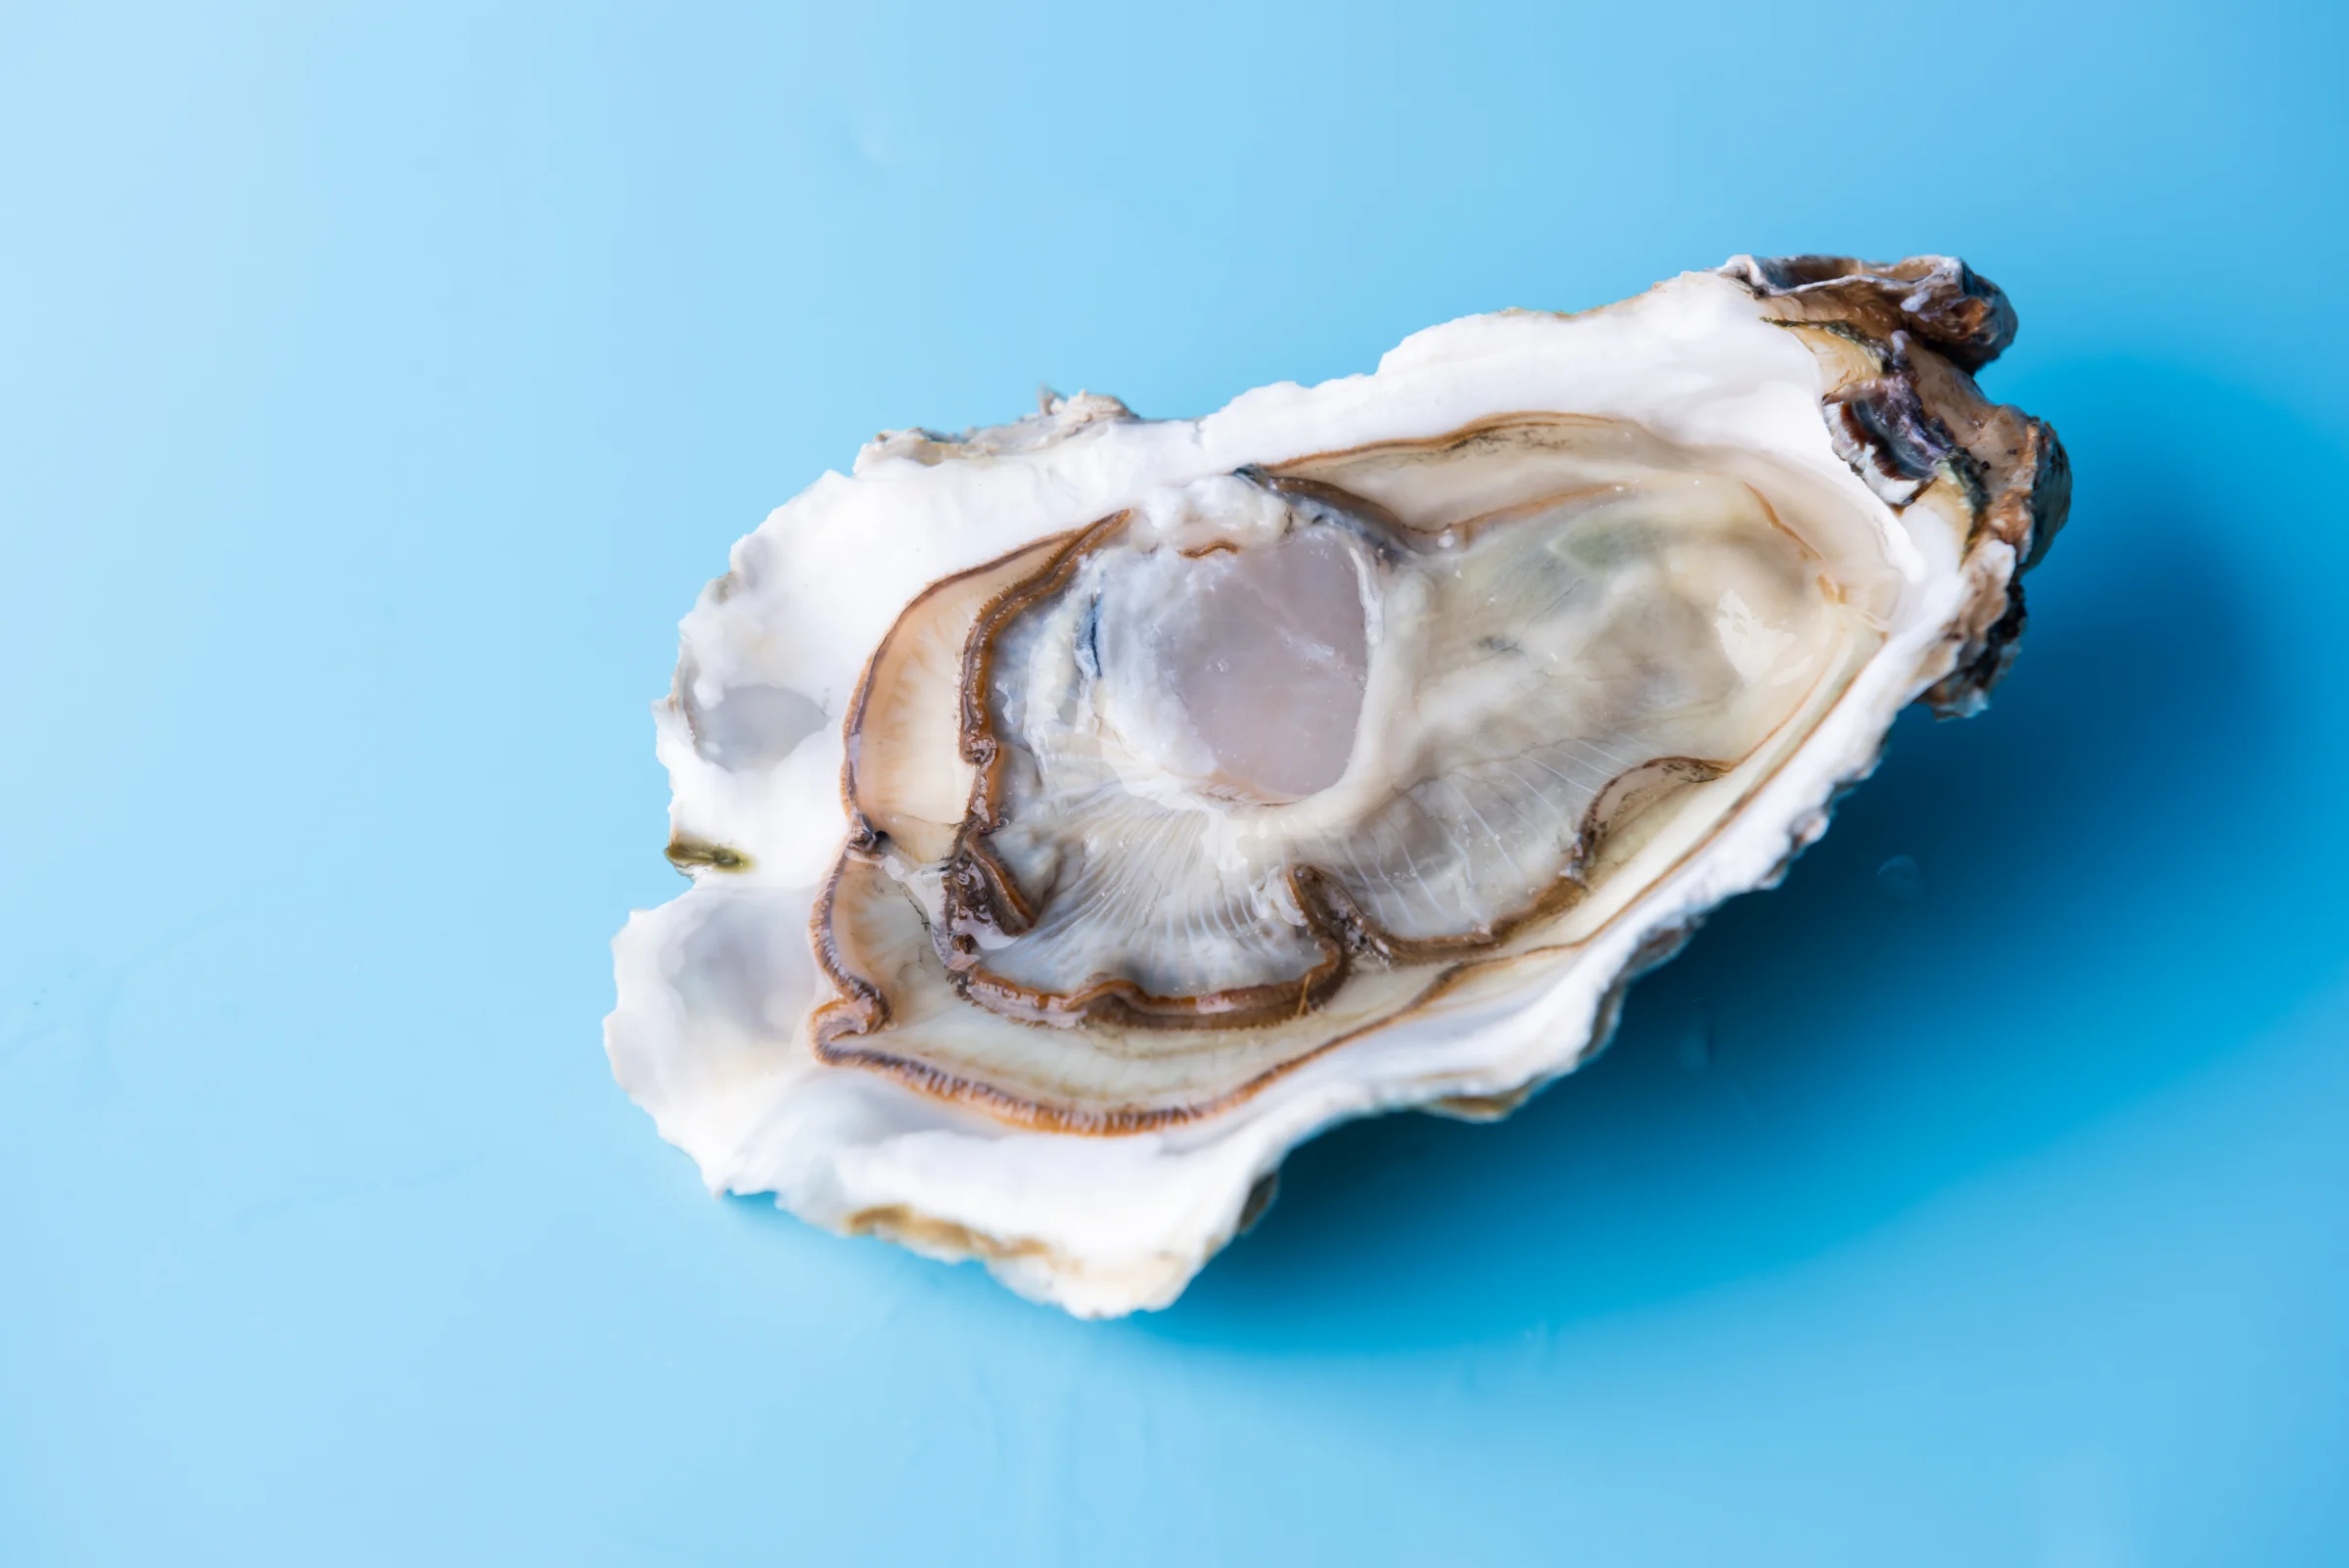 Do aphrodisiacs like oysters and chocolate actually work?